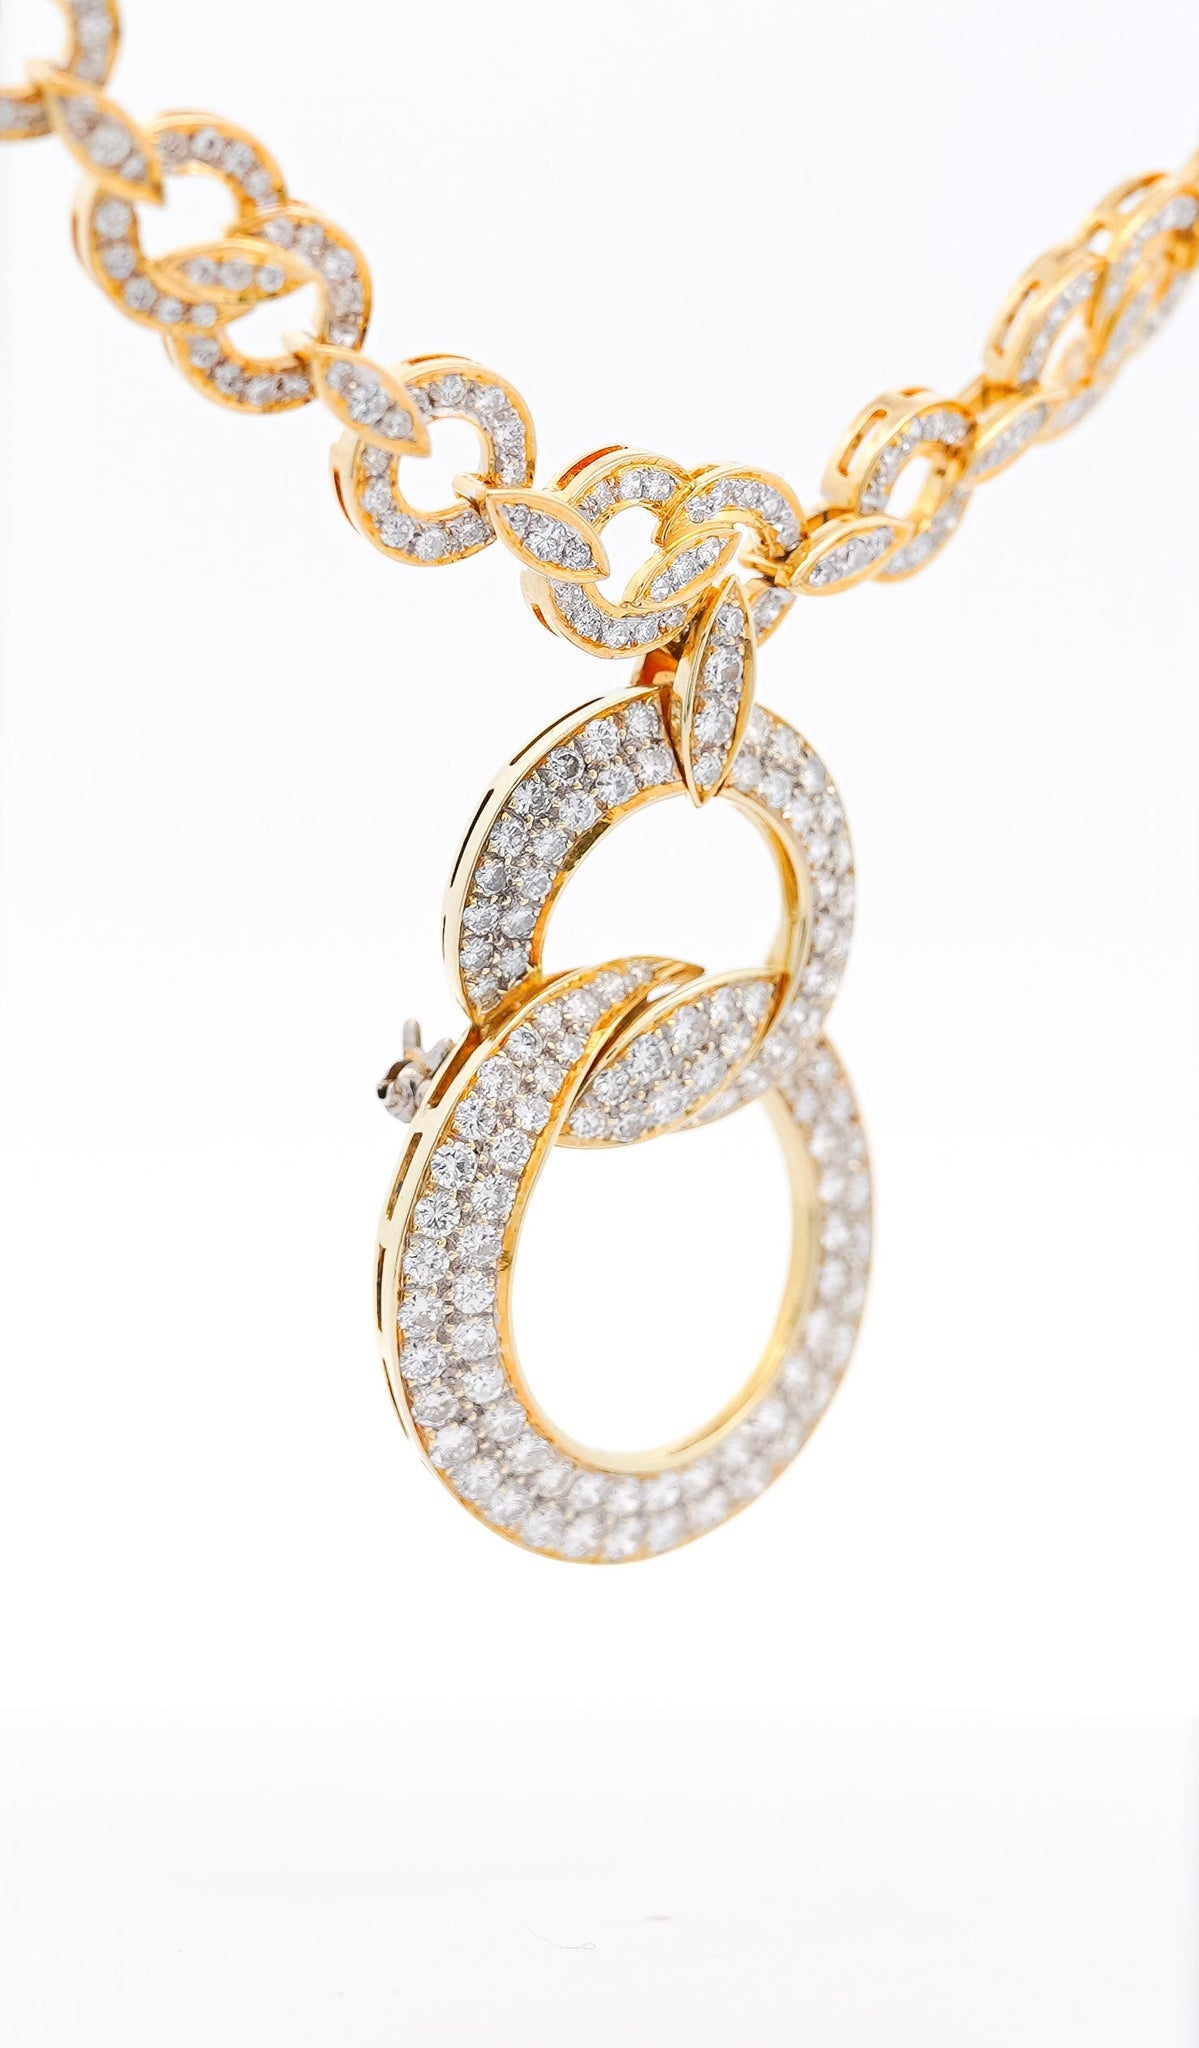 Natural Diamond 16 Carat Round-Brilliant Cut Interlocking Circle Pendant Necklace in 18K Yellow Gold